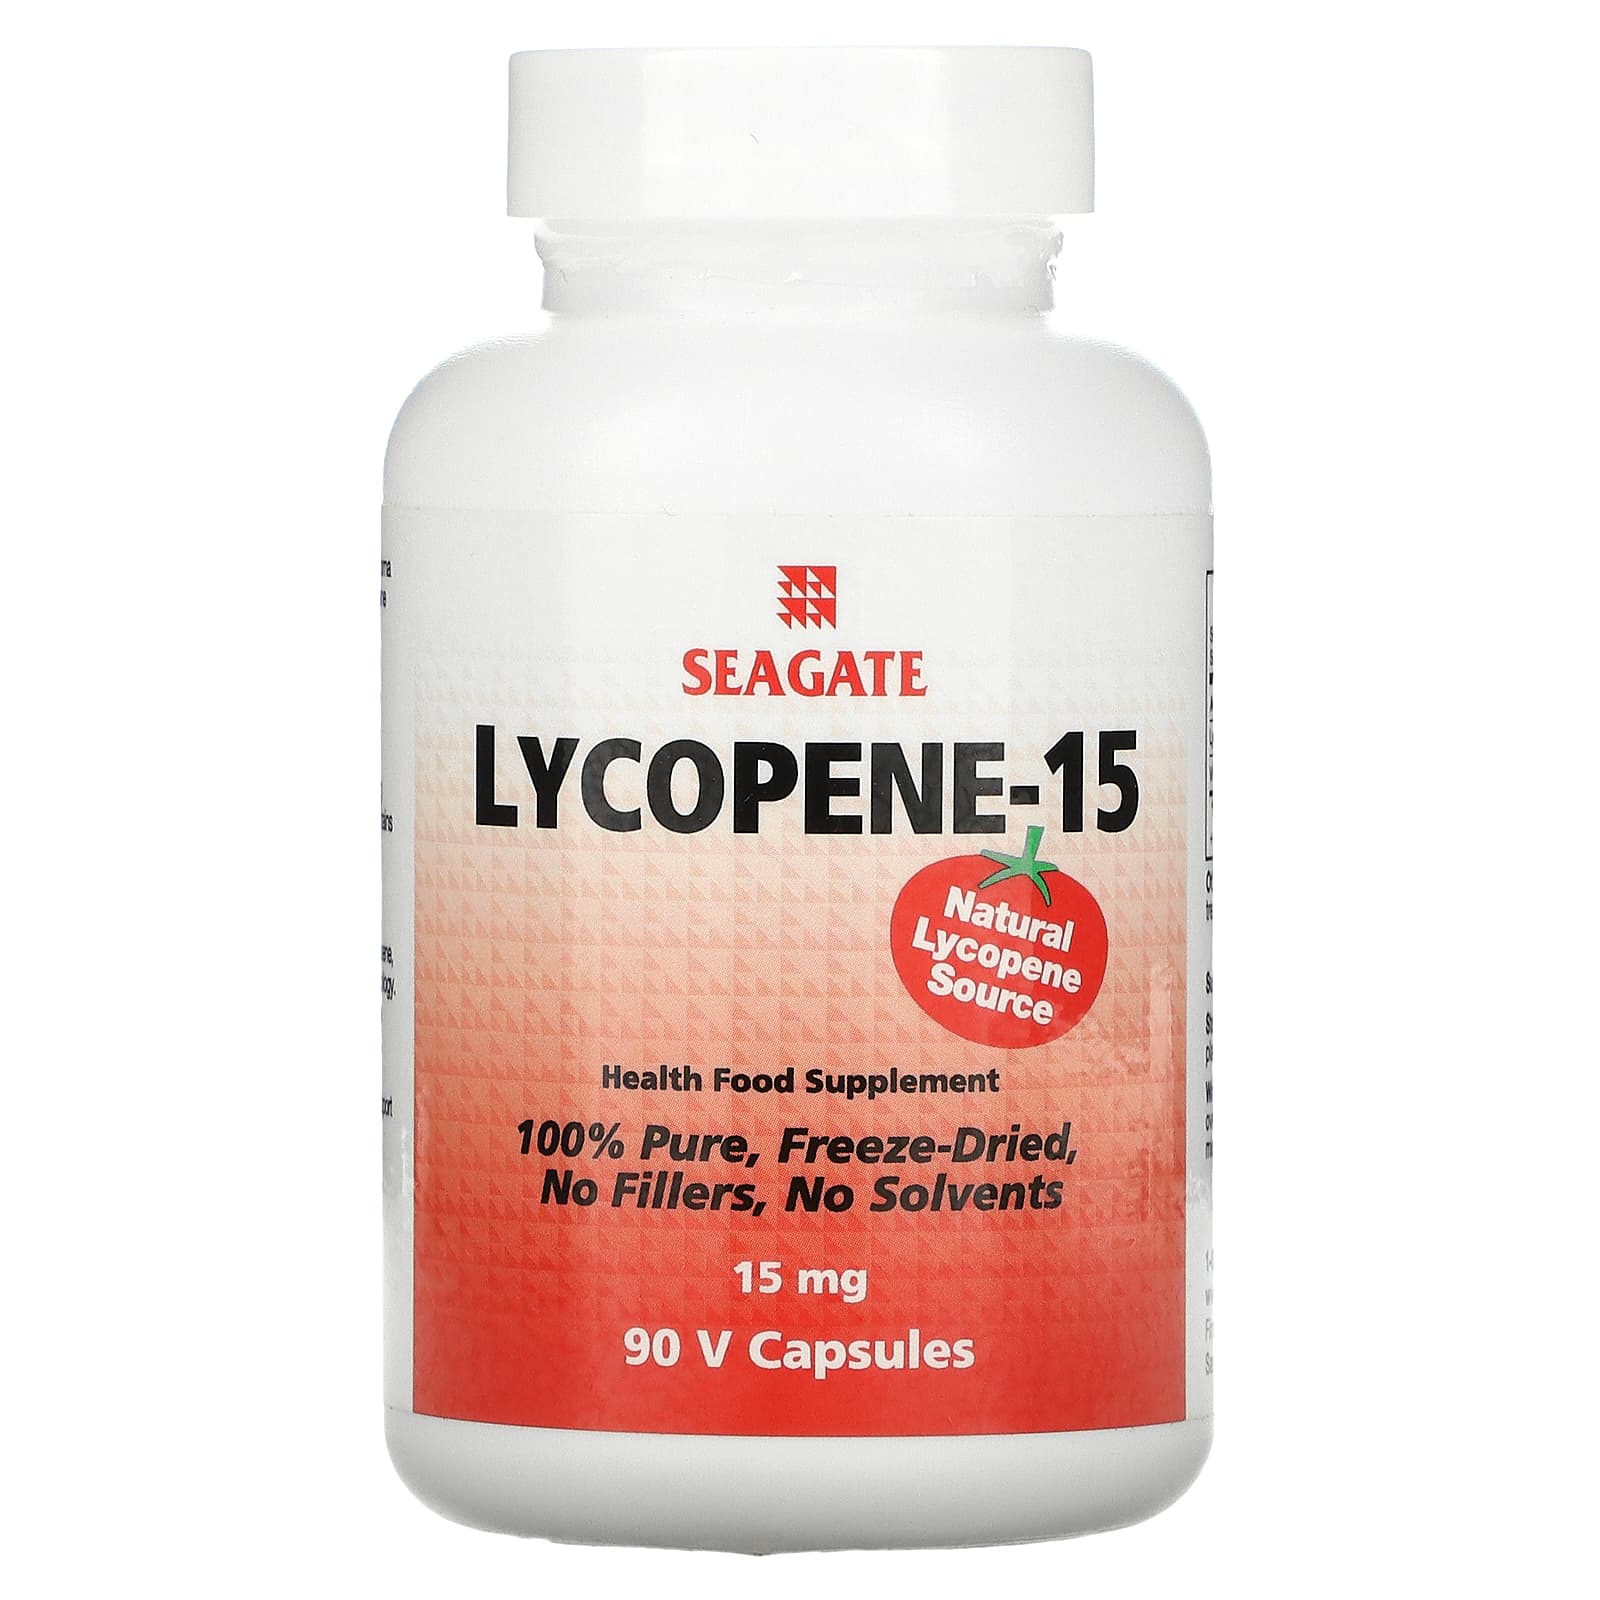 Seagate-Lycopene-15-15 mg-90 V Capsules